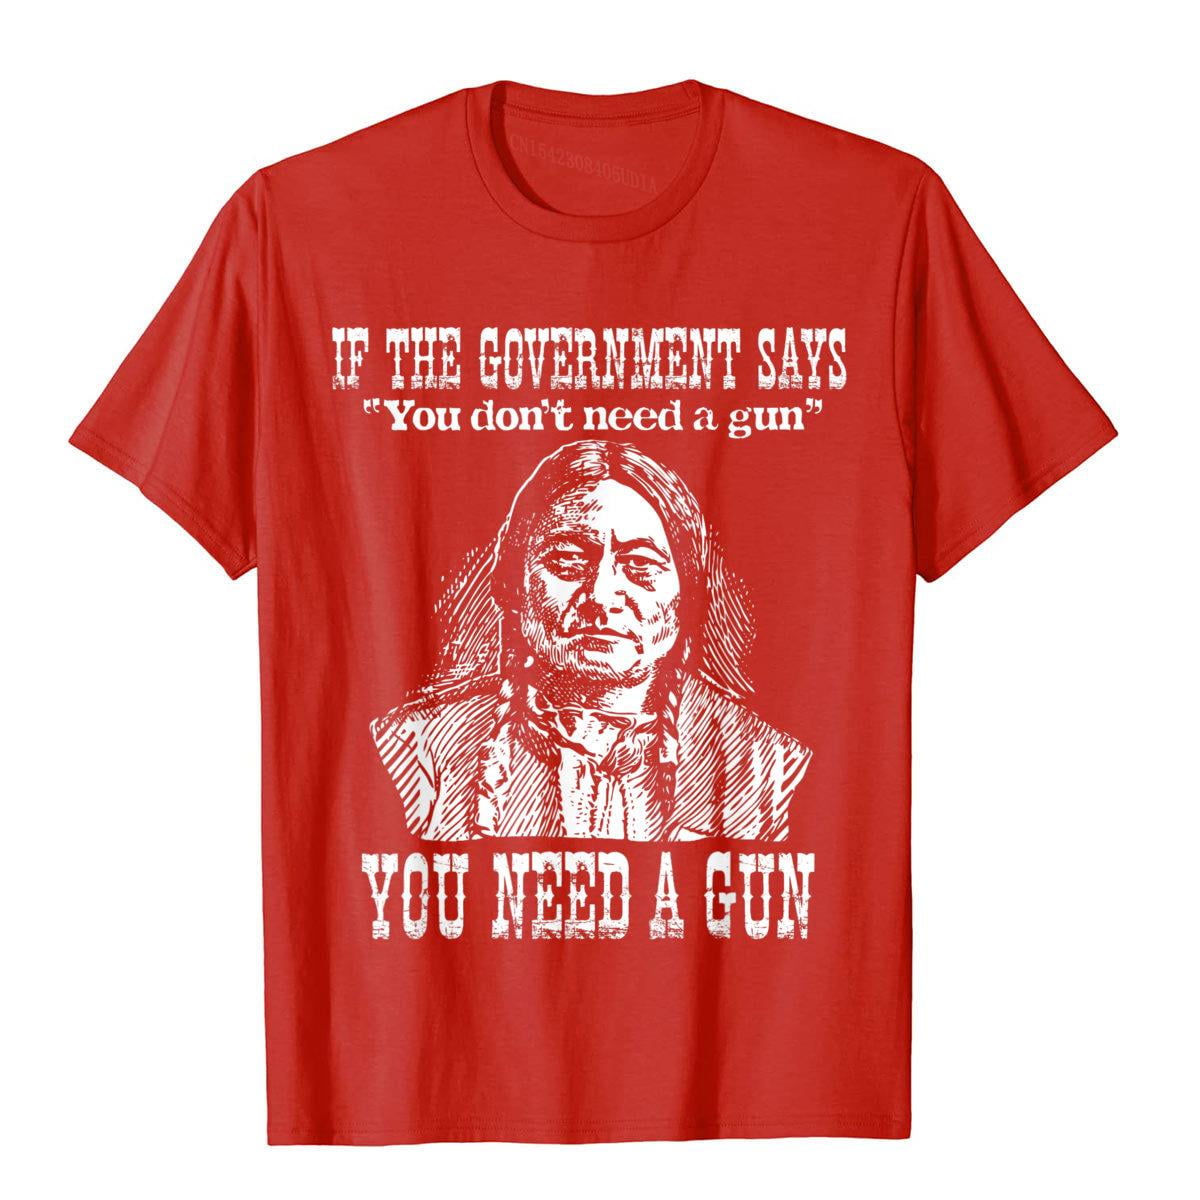 You Need A Gun Sitting Bull Shirt Pro-2nd Amendment T-Shirt Cotton Tops ...